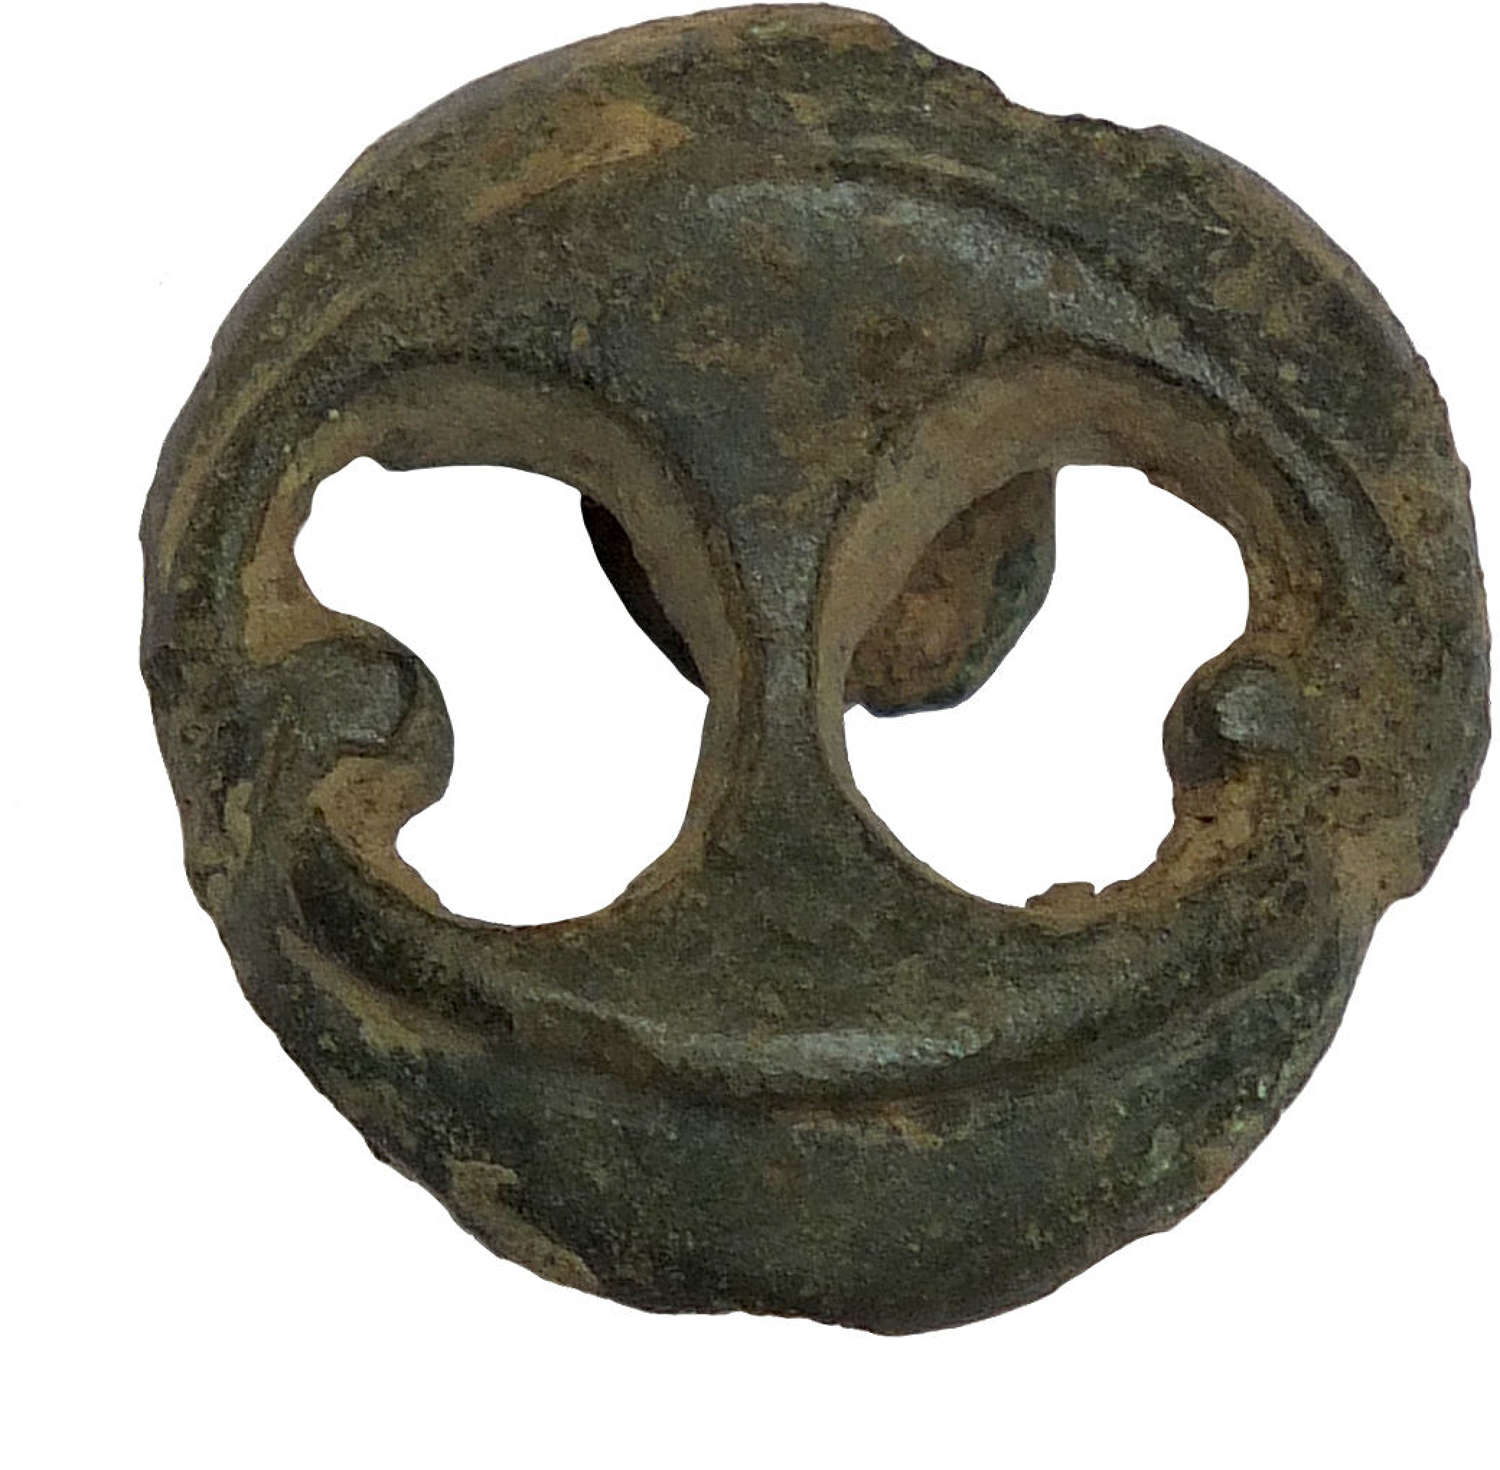 An openwork Celtic bronze mount, c. mid 1st Century A.D.